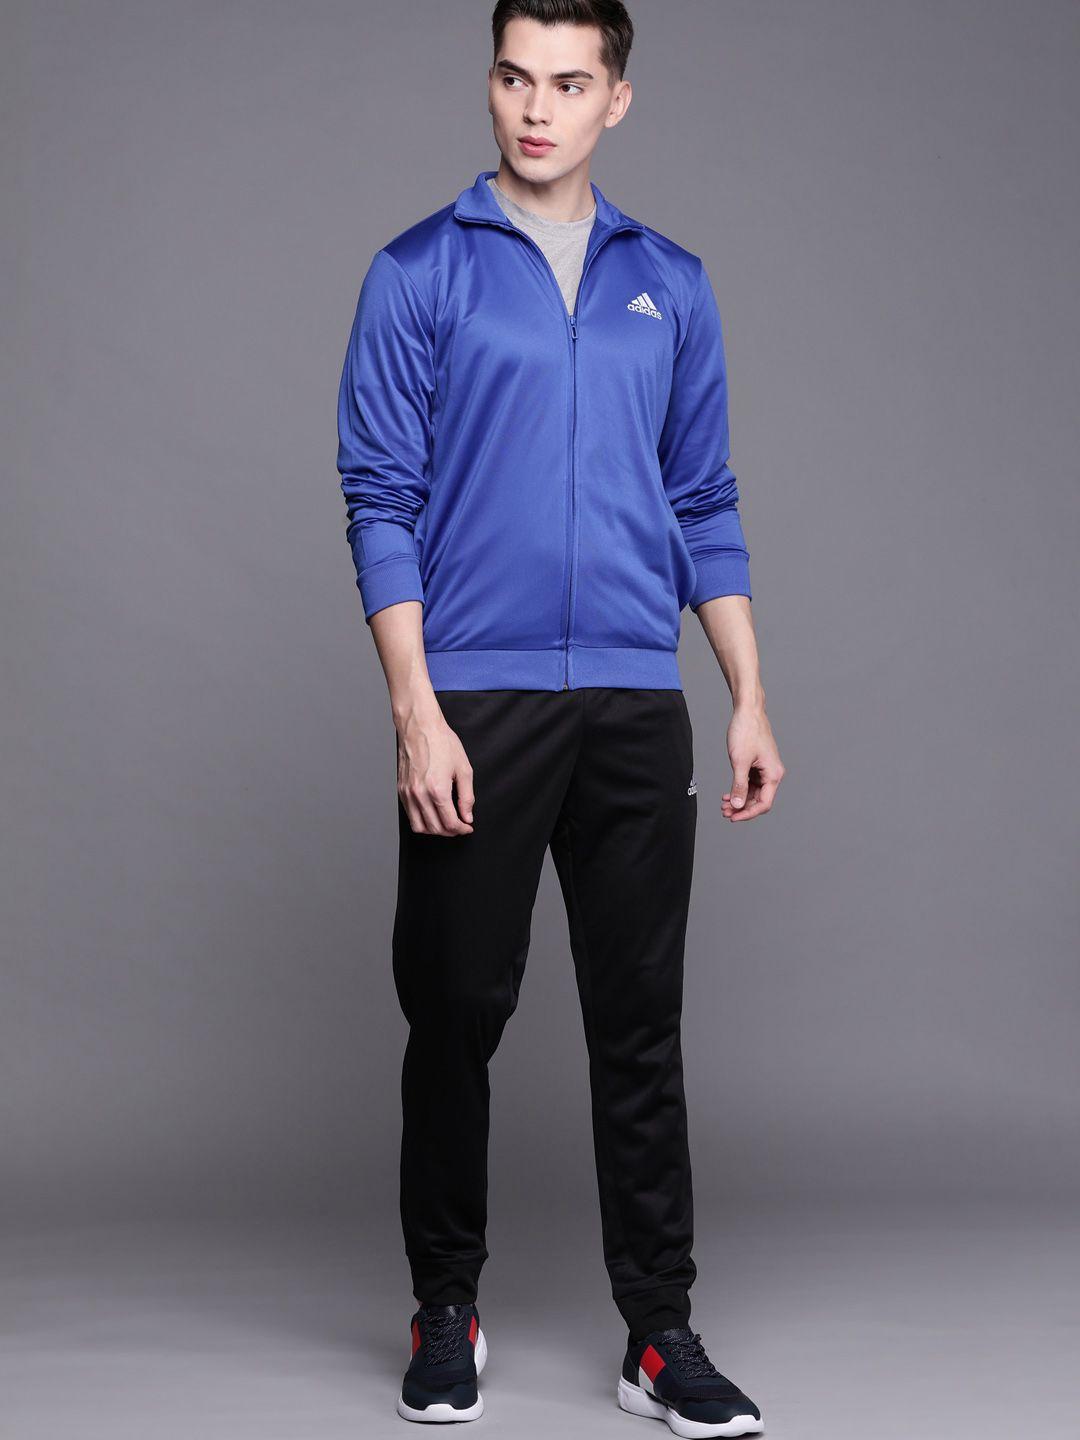 adidas men blue & black solid track suit